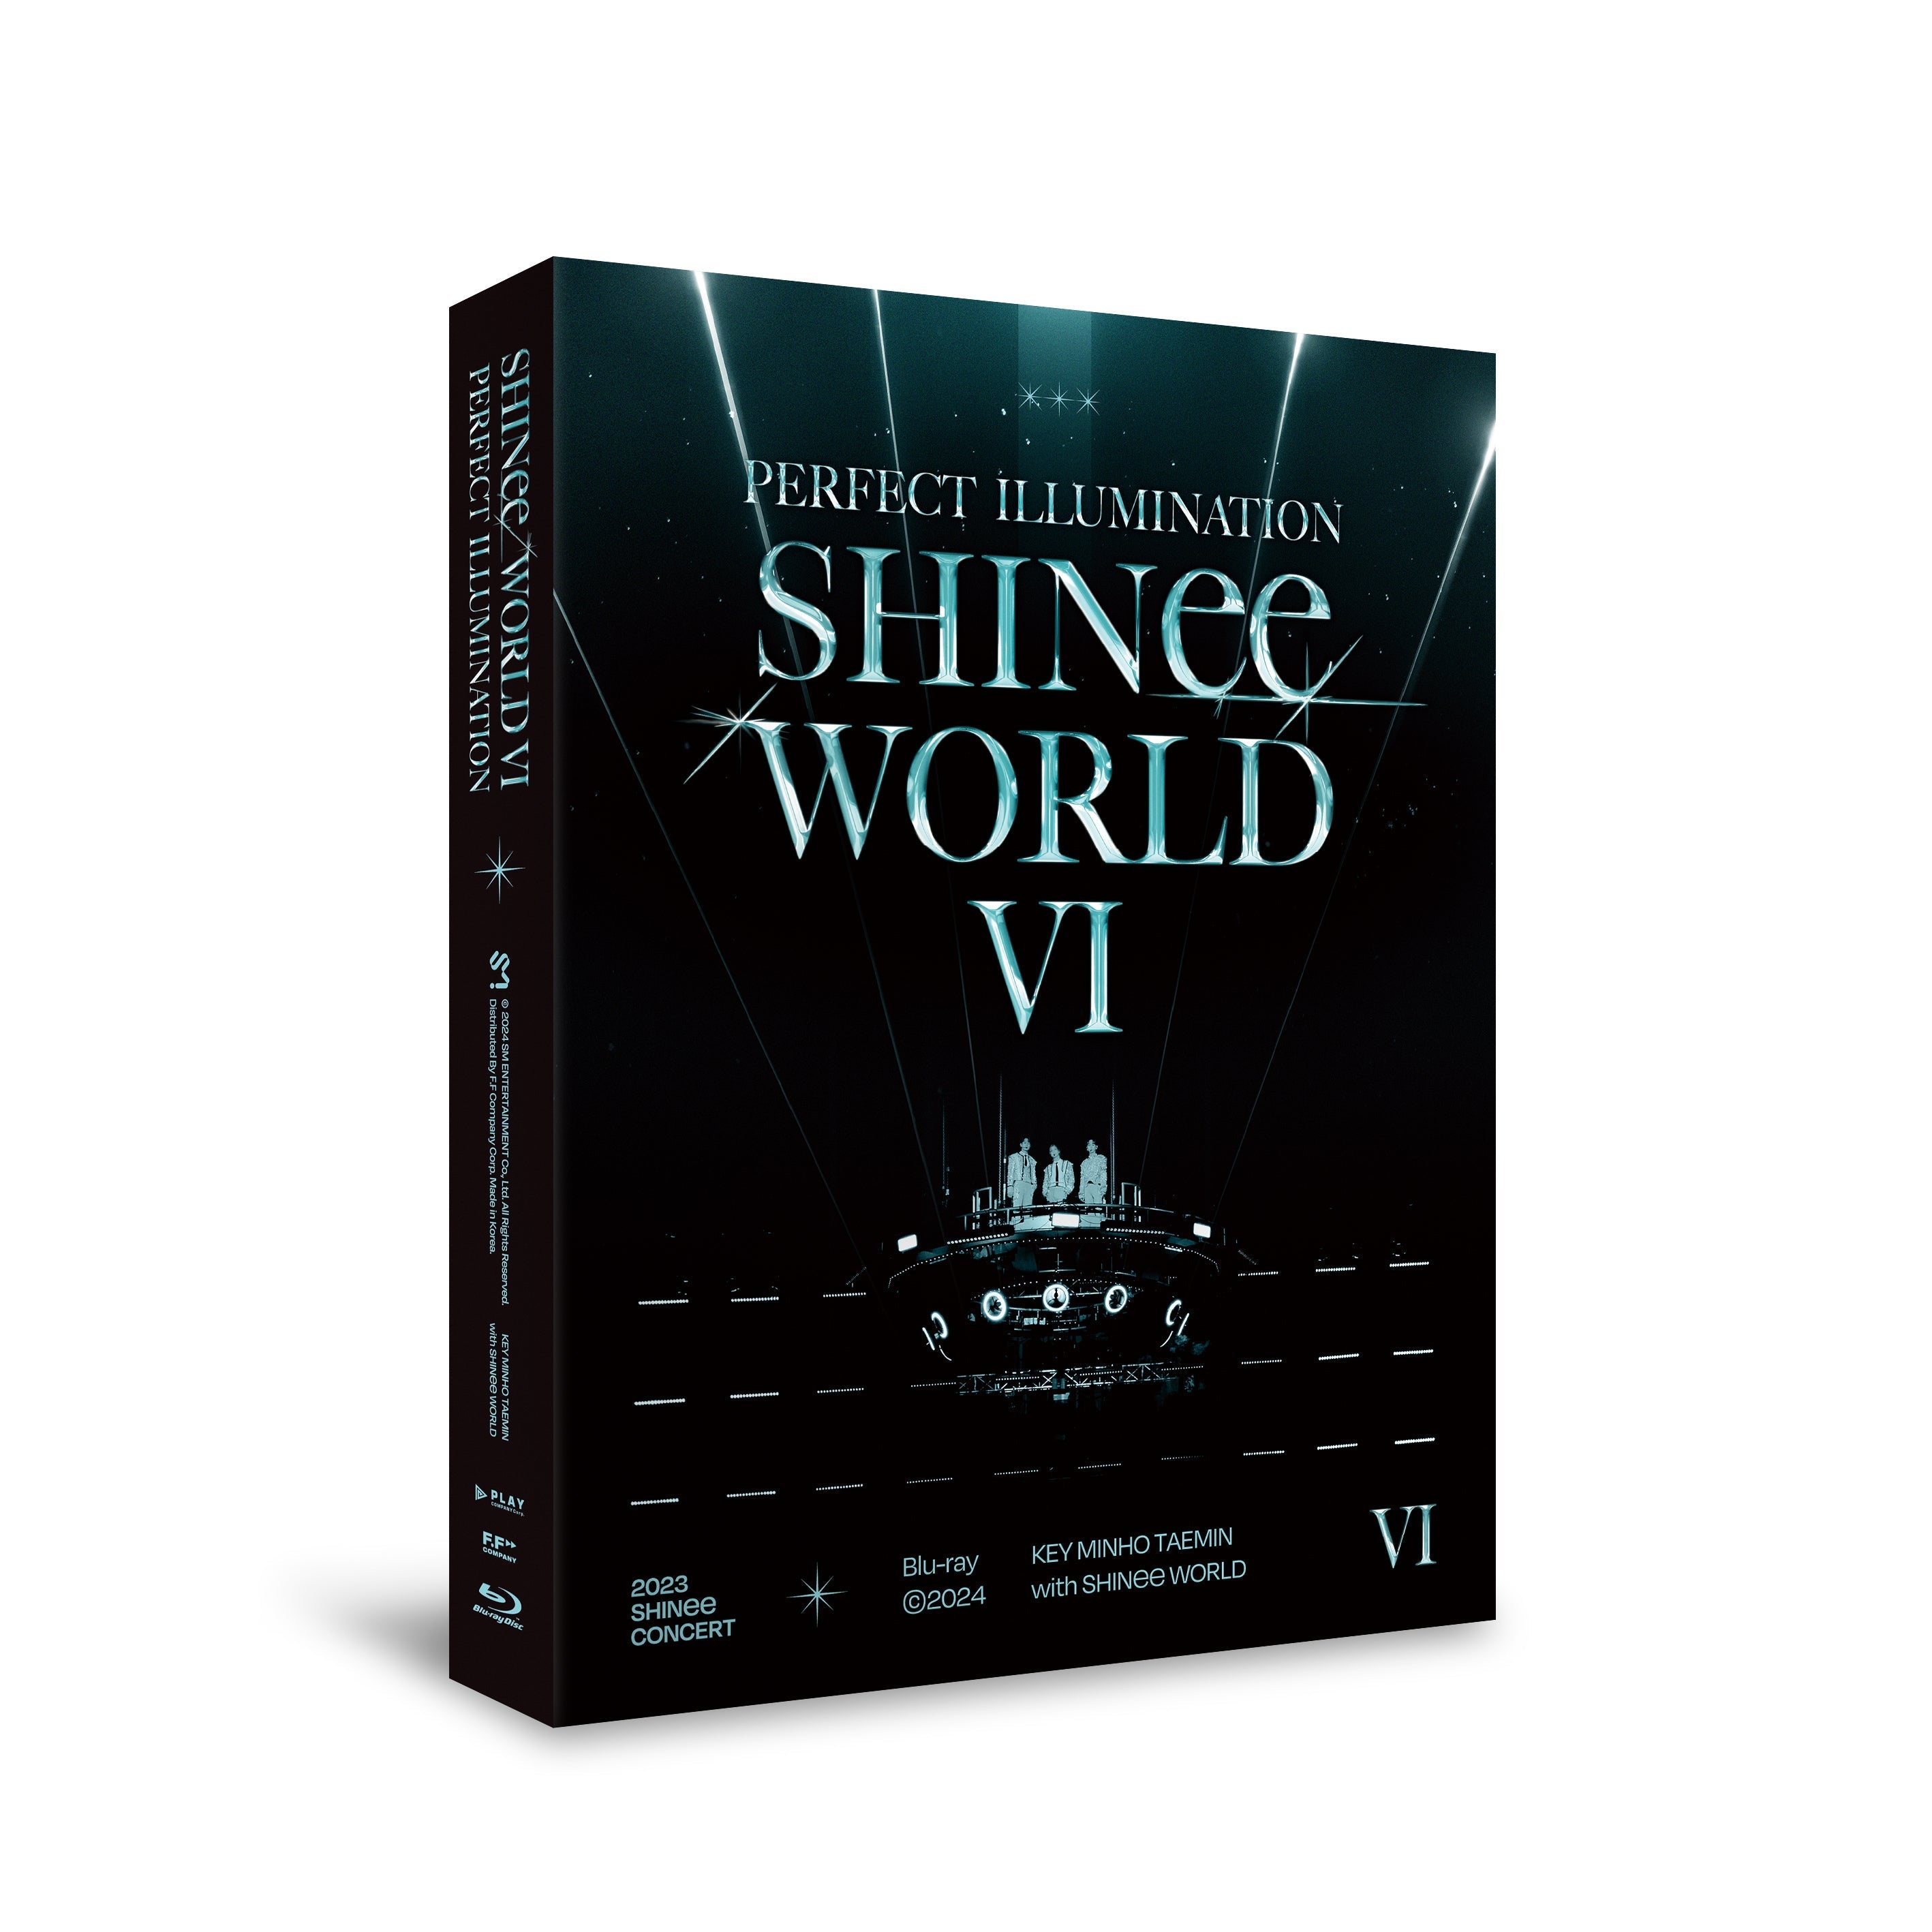 SHINee - SHINee WORLD VI [PERFECT ILLUMINATION] in SEOUL Blu-ray - KPOPHERO